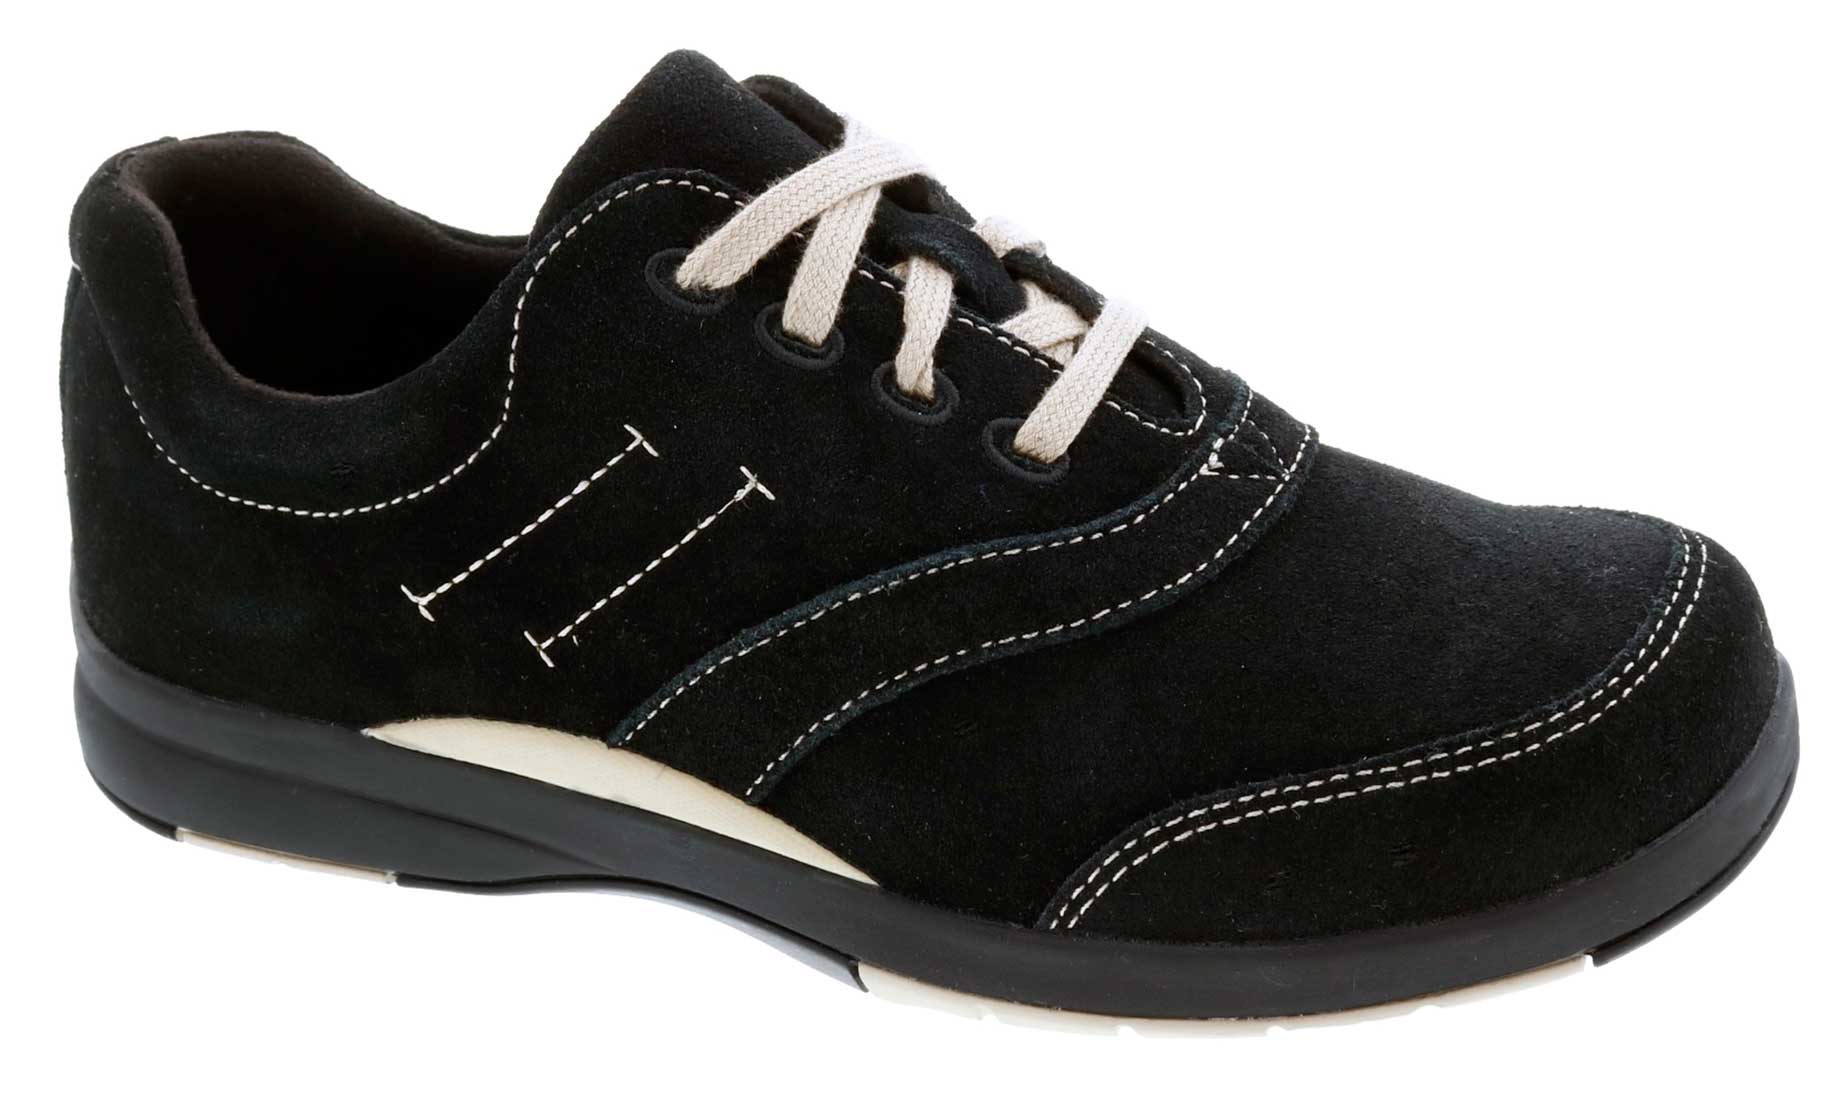 Drew Shoes Columbia 10829 - Women's Comfort Therapeutic Diabetic Athletic Shoe - Extra Depth For Orthotics